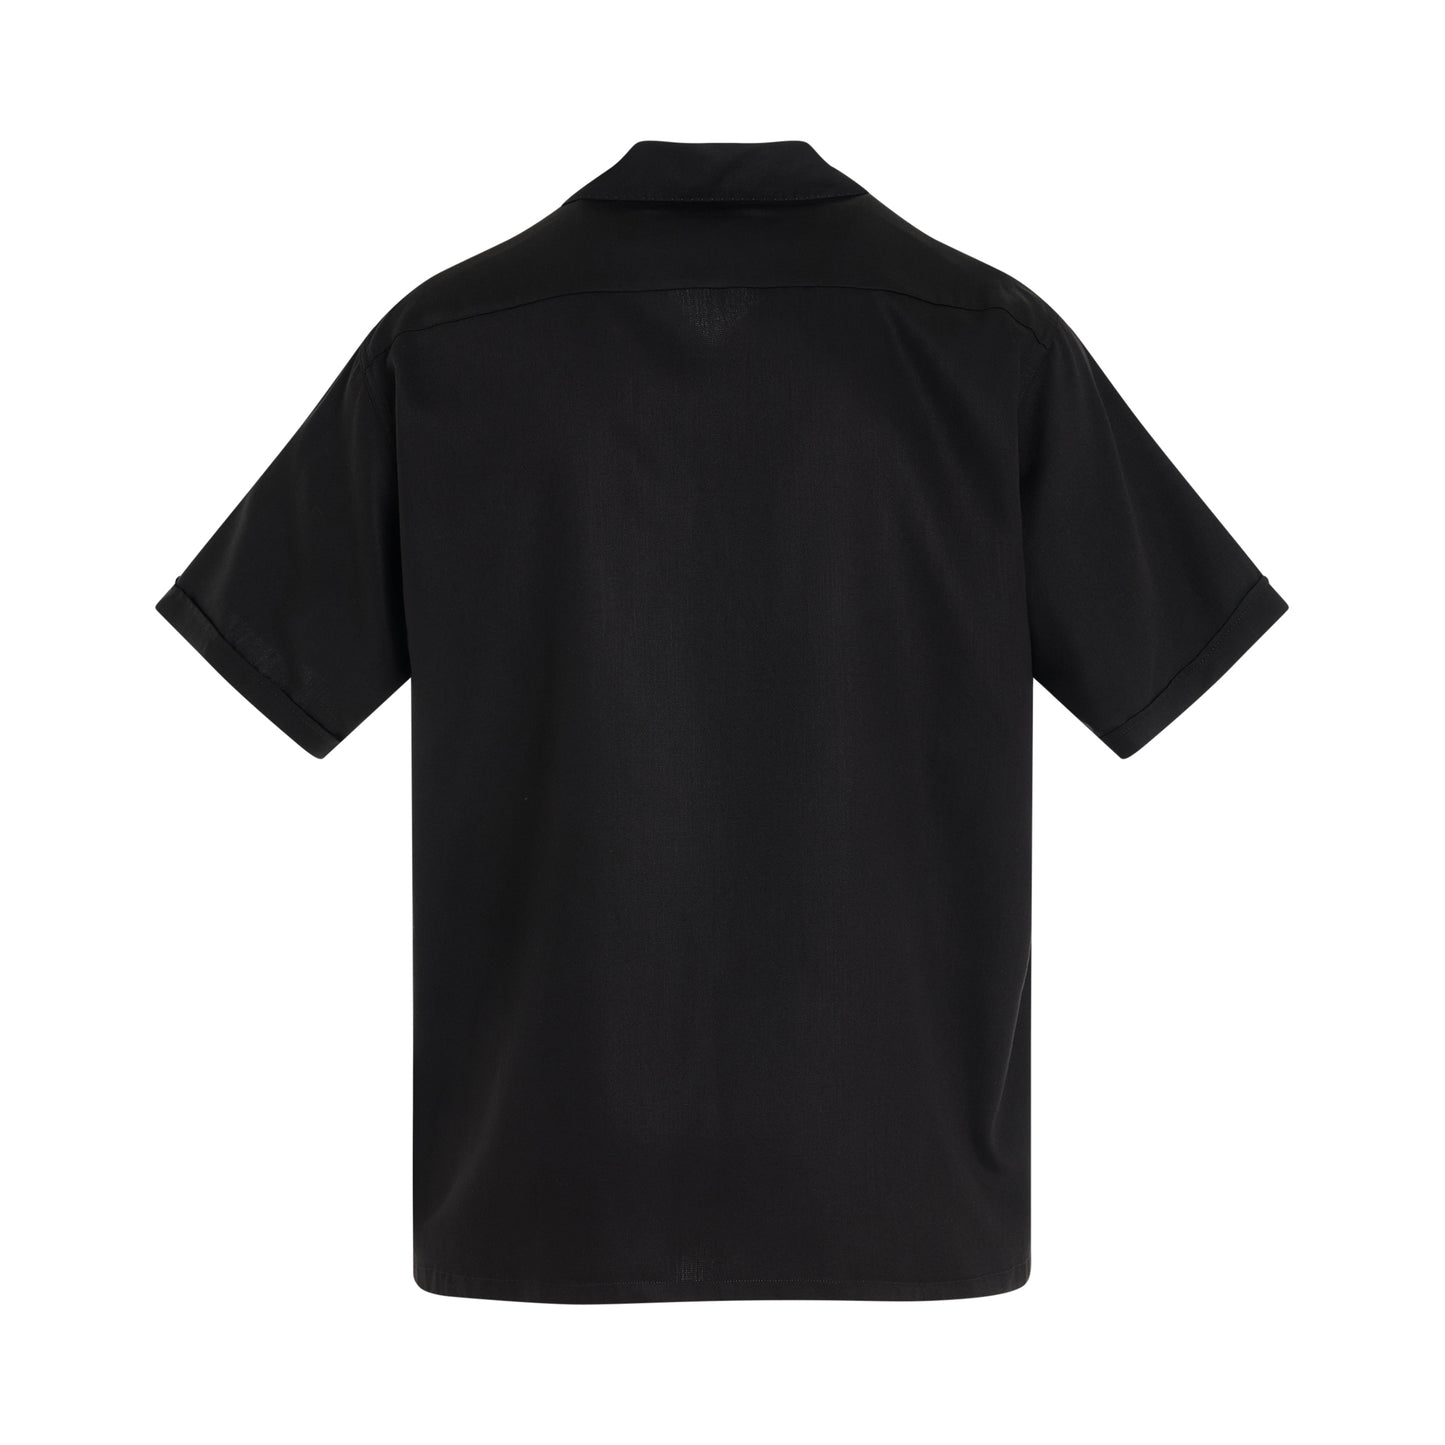 Light Rayon Short-Sleeved Shirt in Black